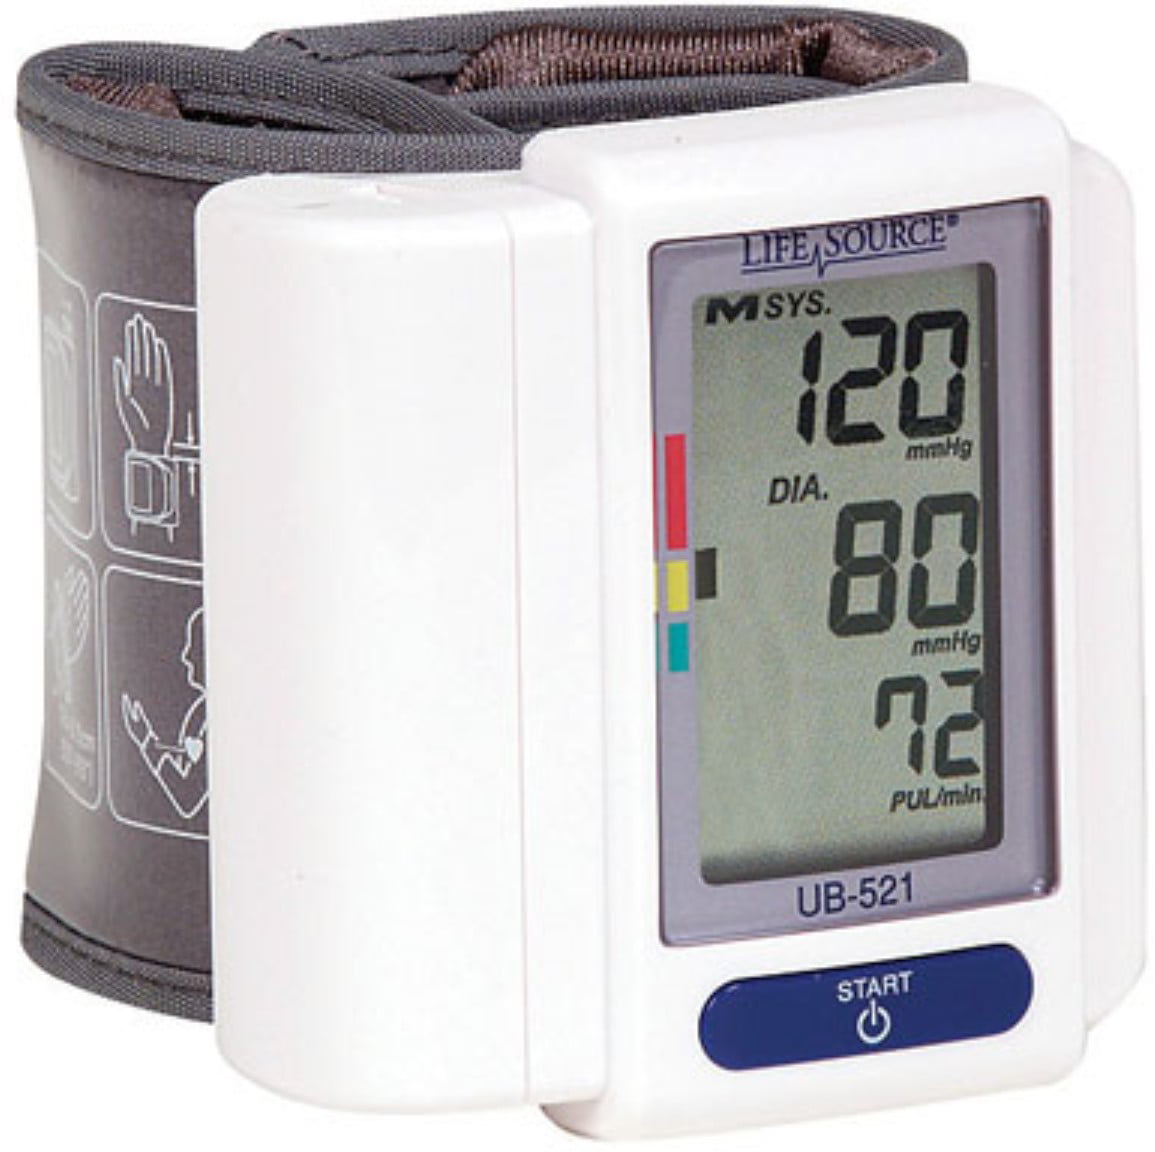 Lifesource Ub 521 Digital Wrist Blood Pressure Monitor